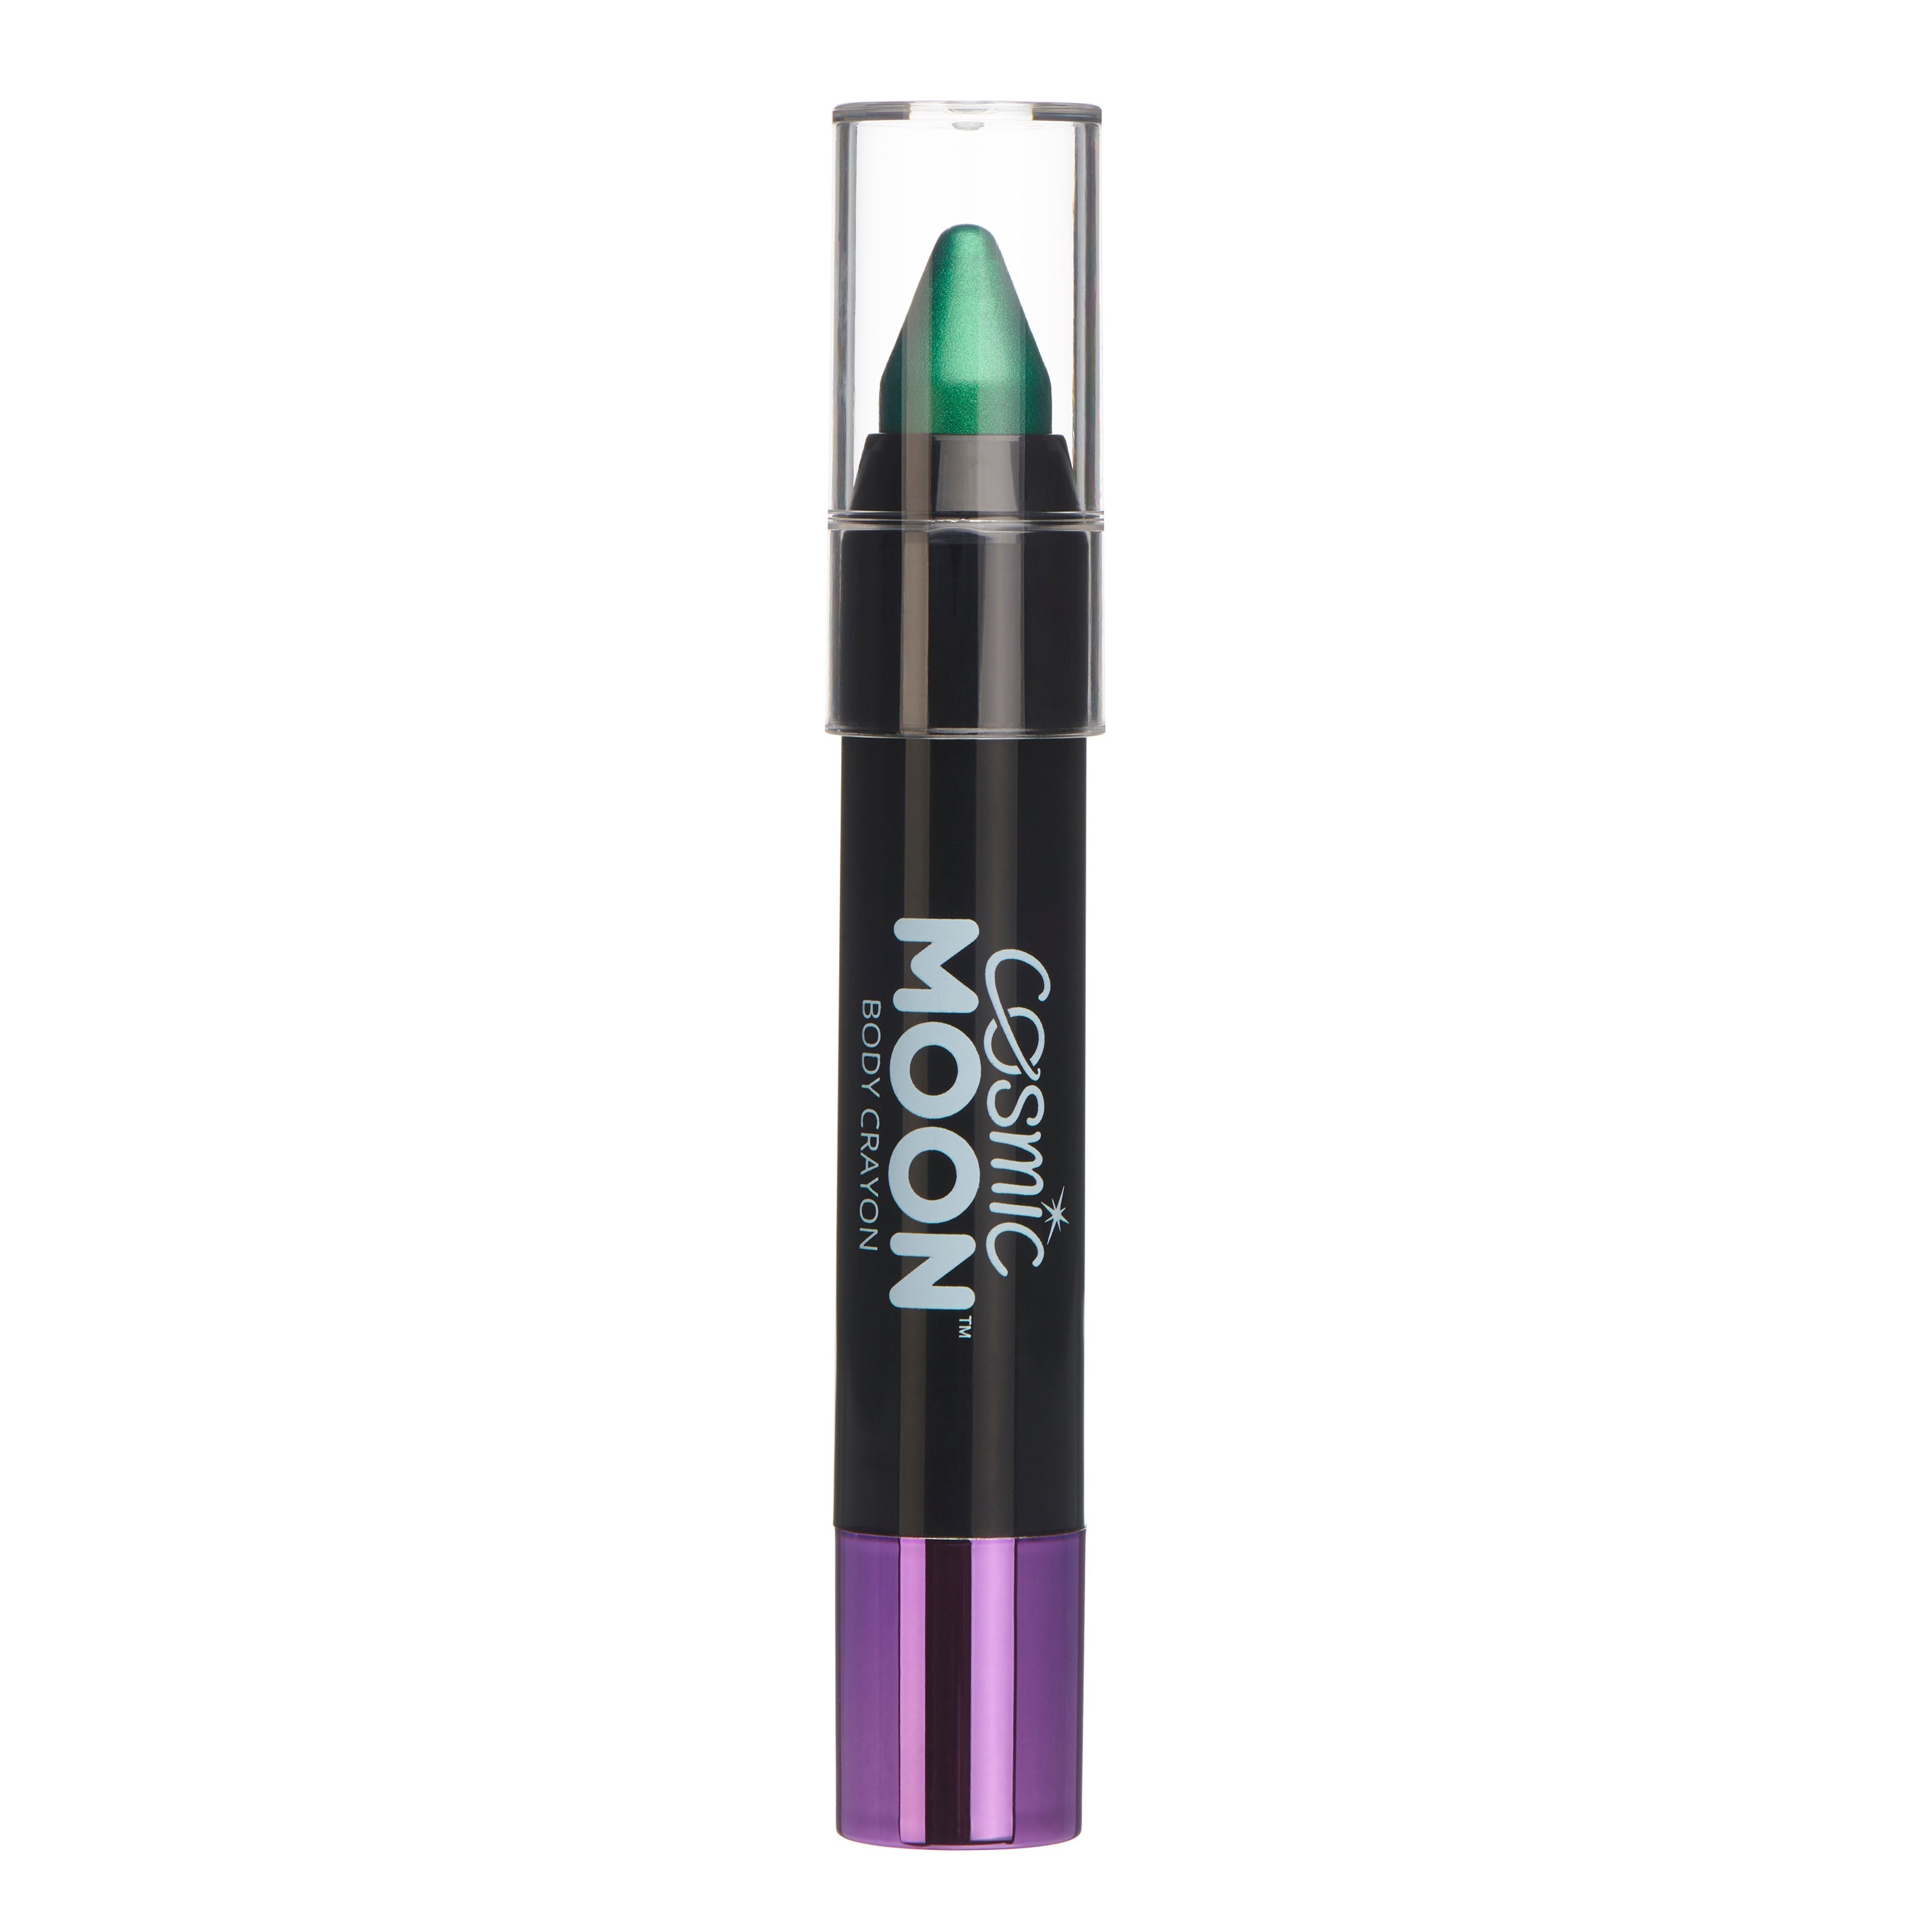 Green - Metallic Face & Body Crayon, 3.5g. Cosmetically certified, FDA & Health Canada compliant and cruelty free.